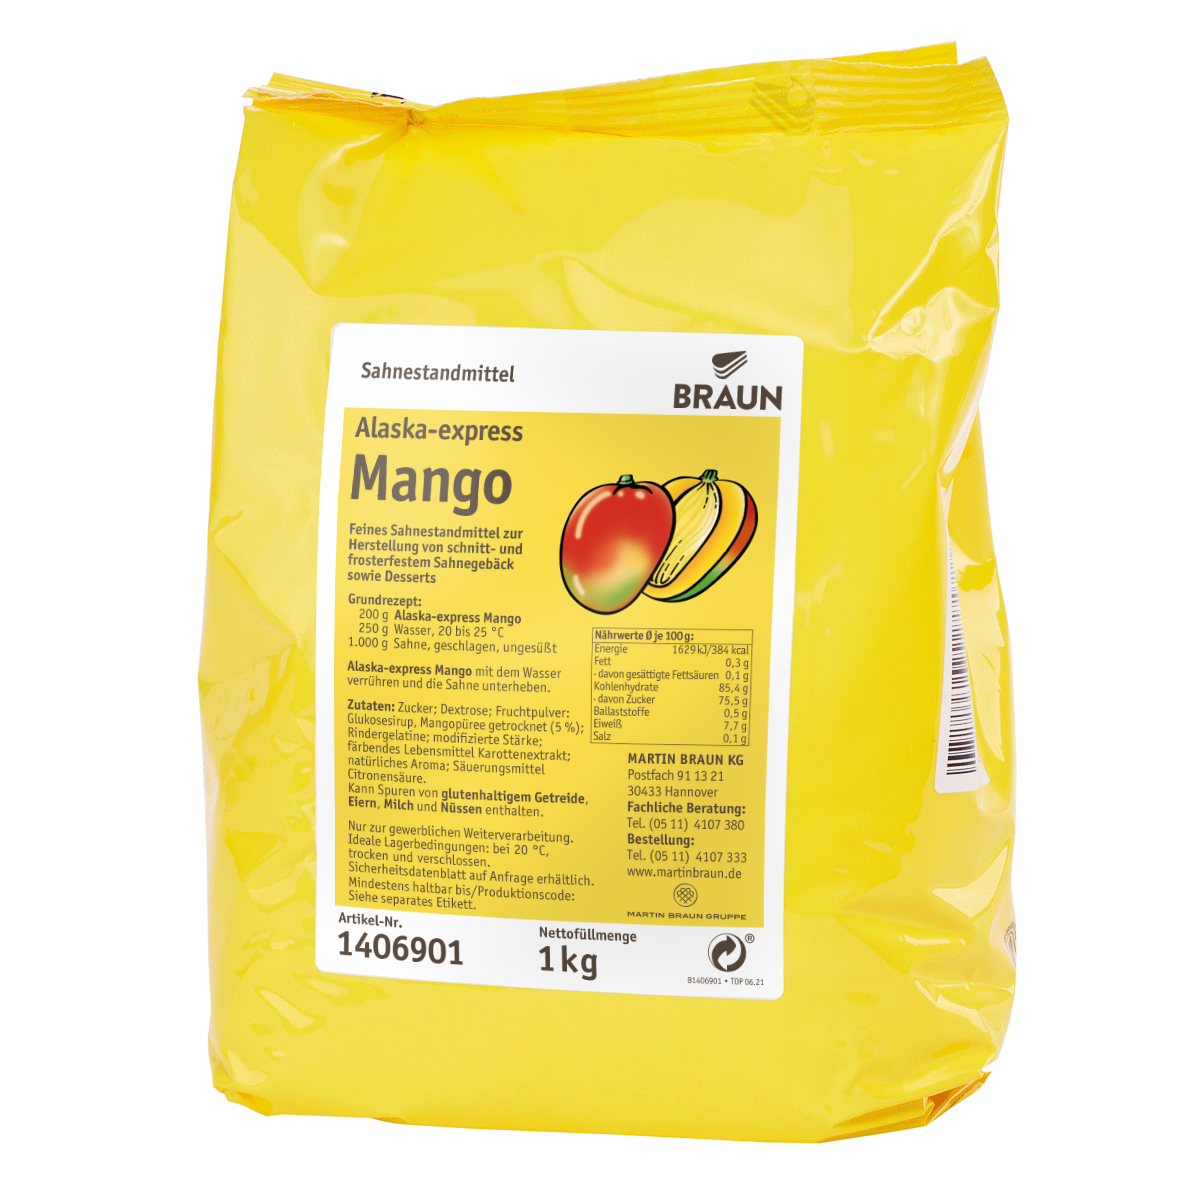 Purée de marrons express et ultra savoureuse - Mango and Salt